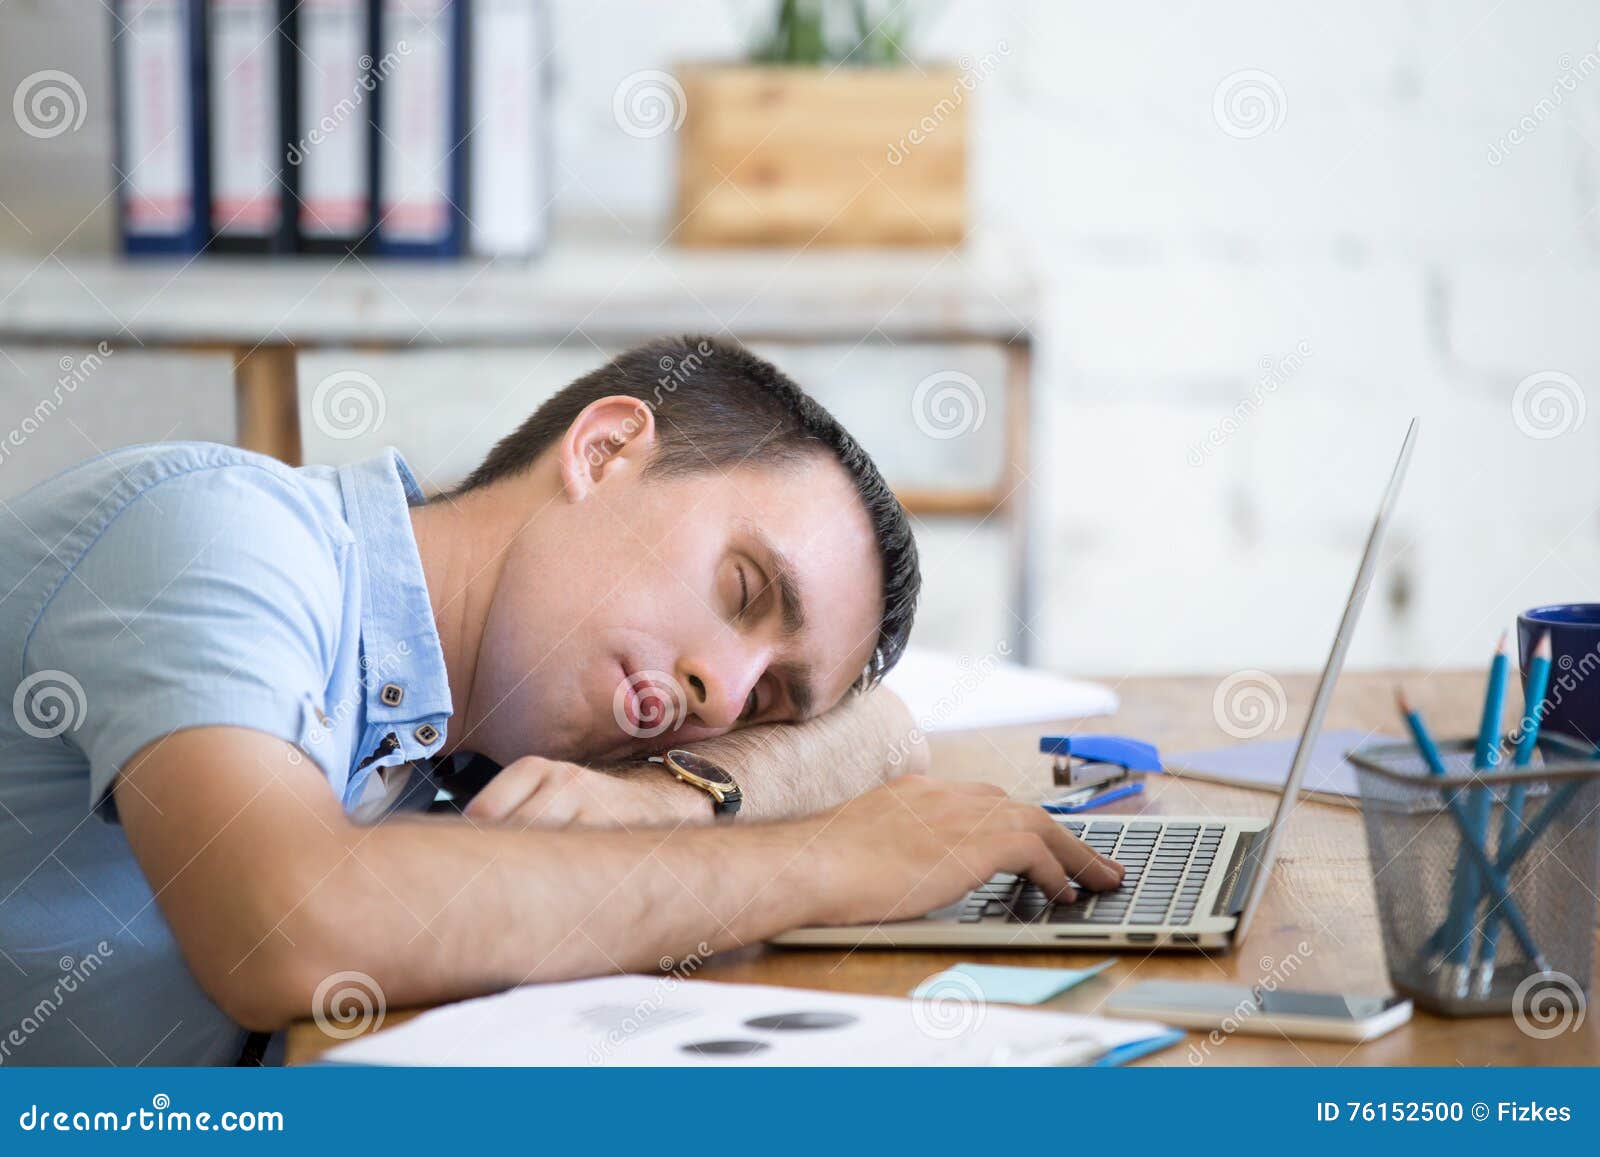 Young Man Sleeping On Office Desk Stock Photo Image Of Loft